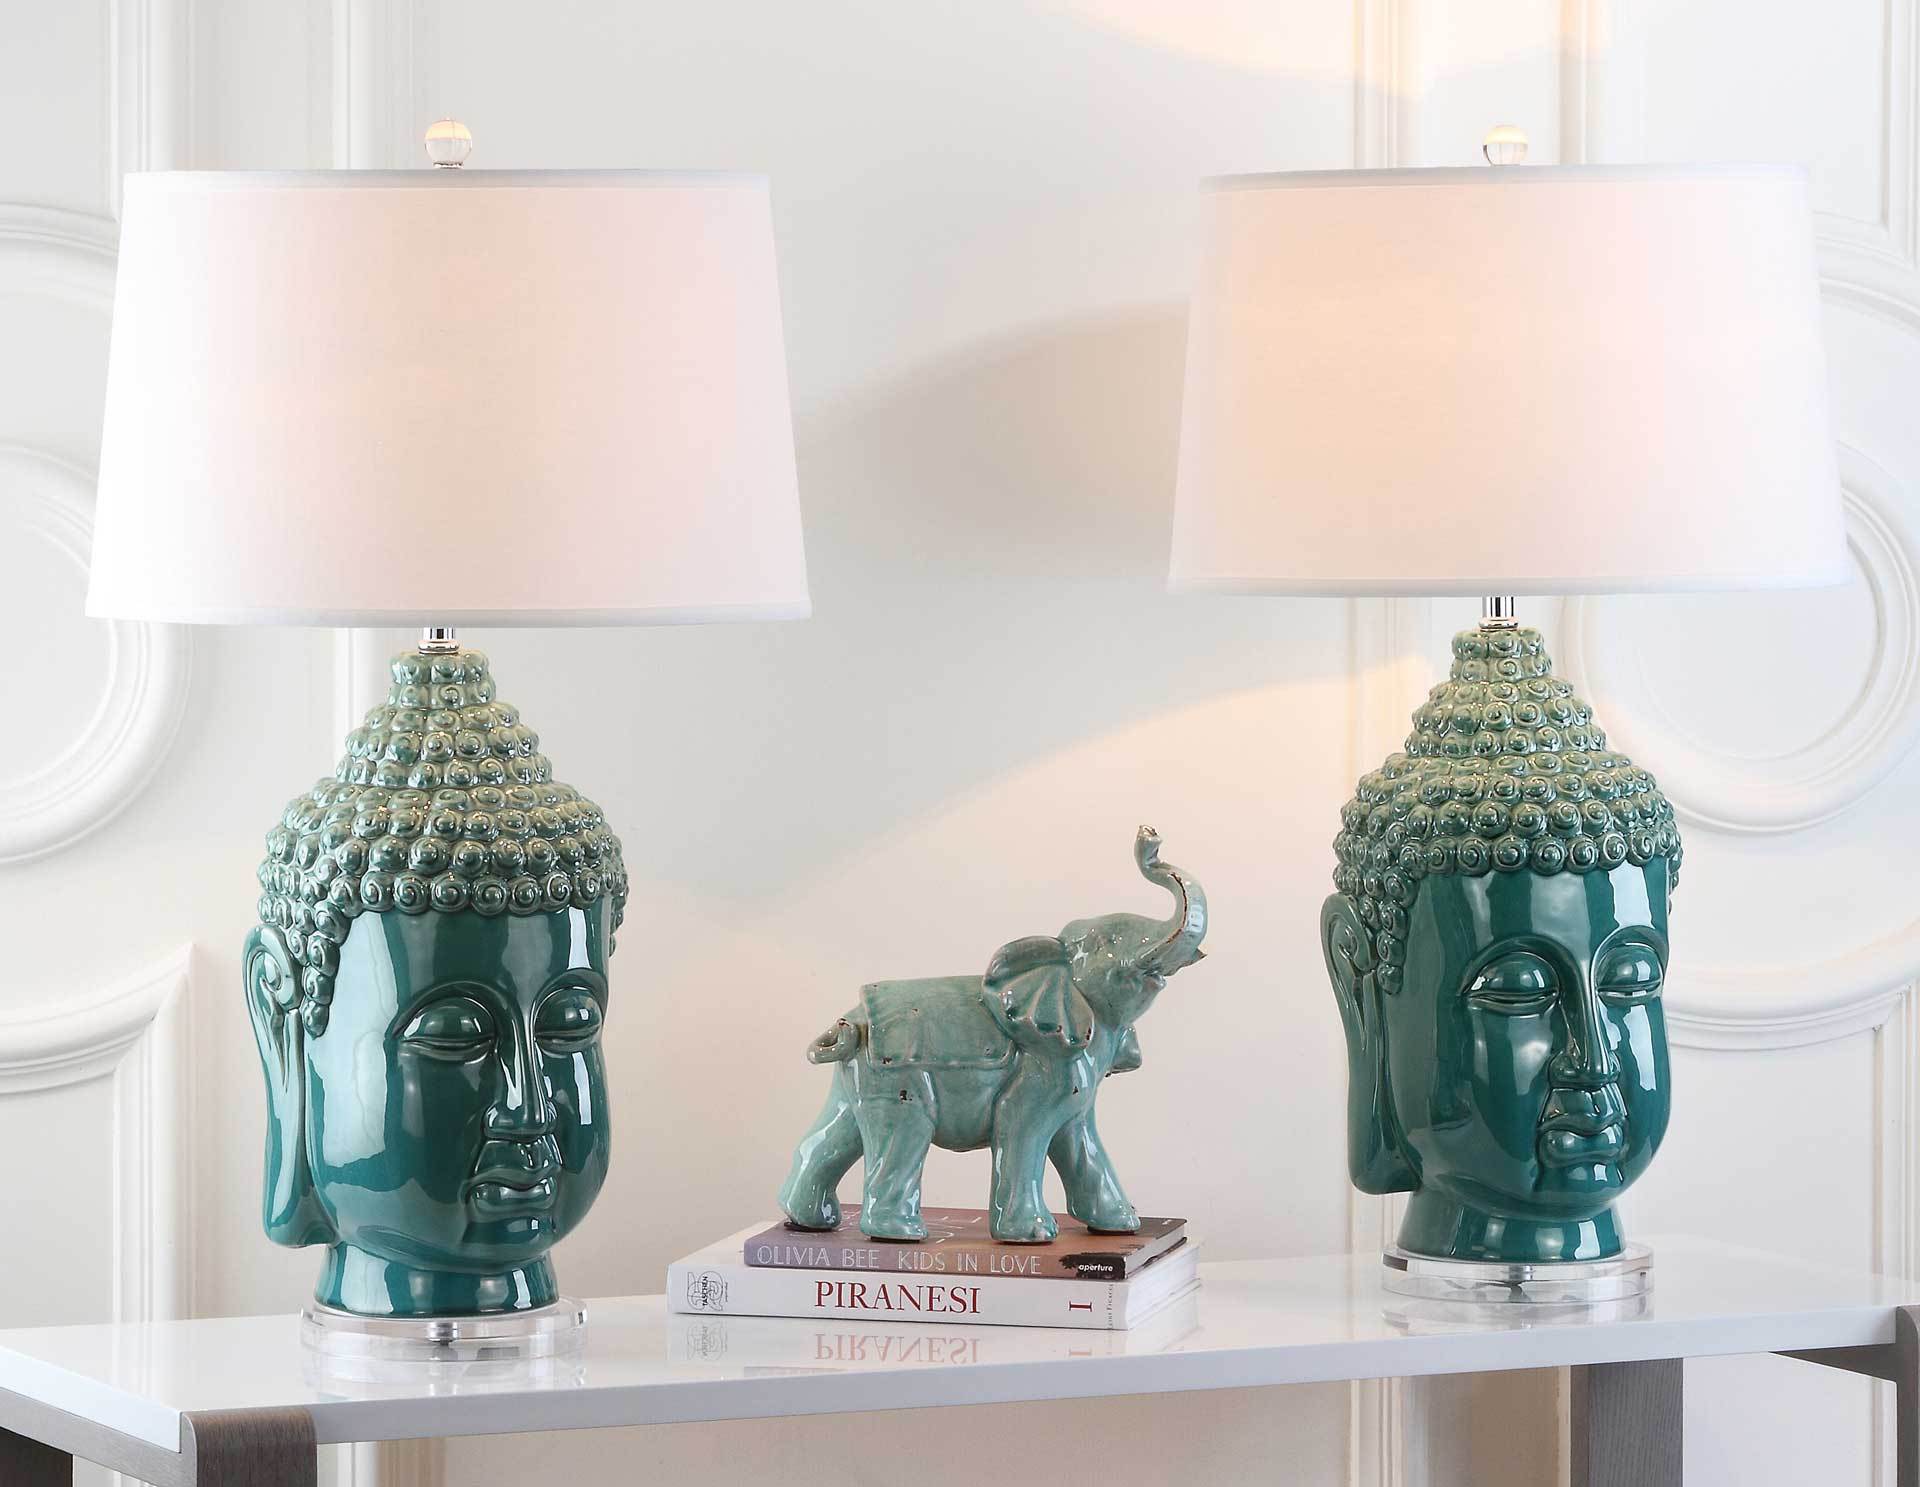 Sean Buddha Table Lamp Blue (Set of 2)